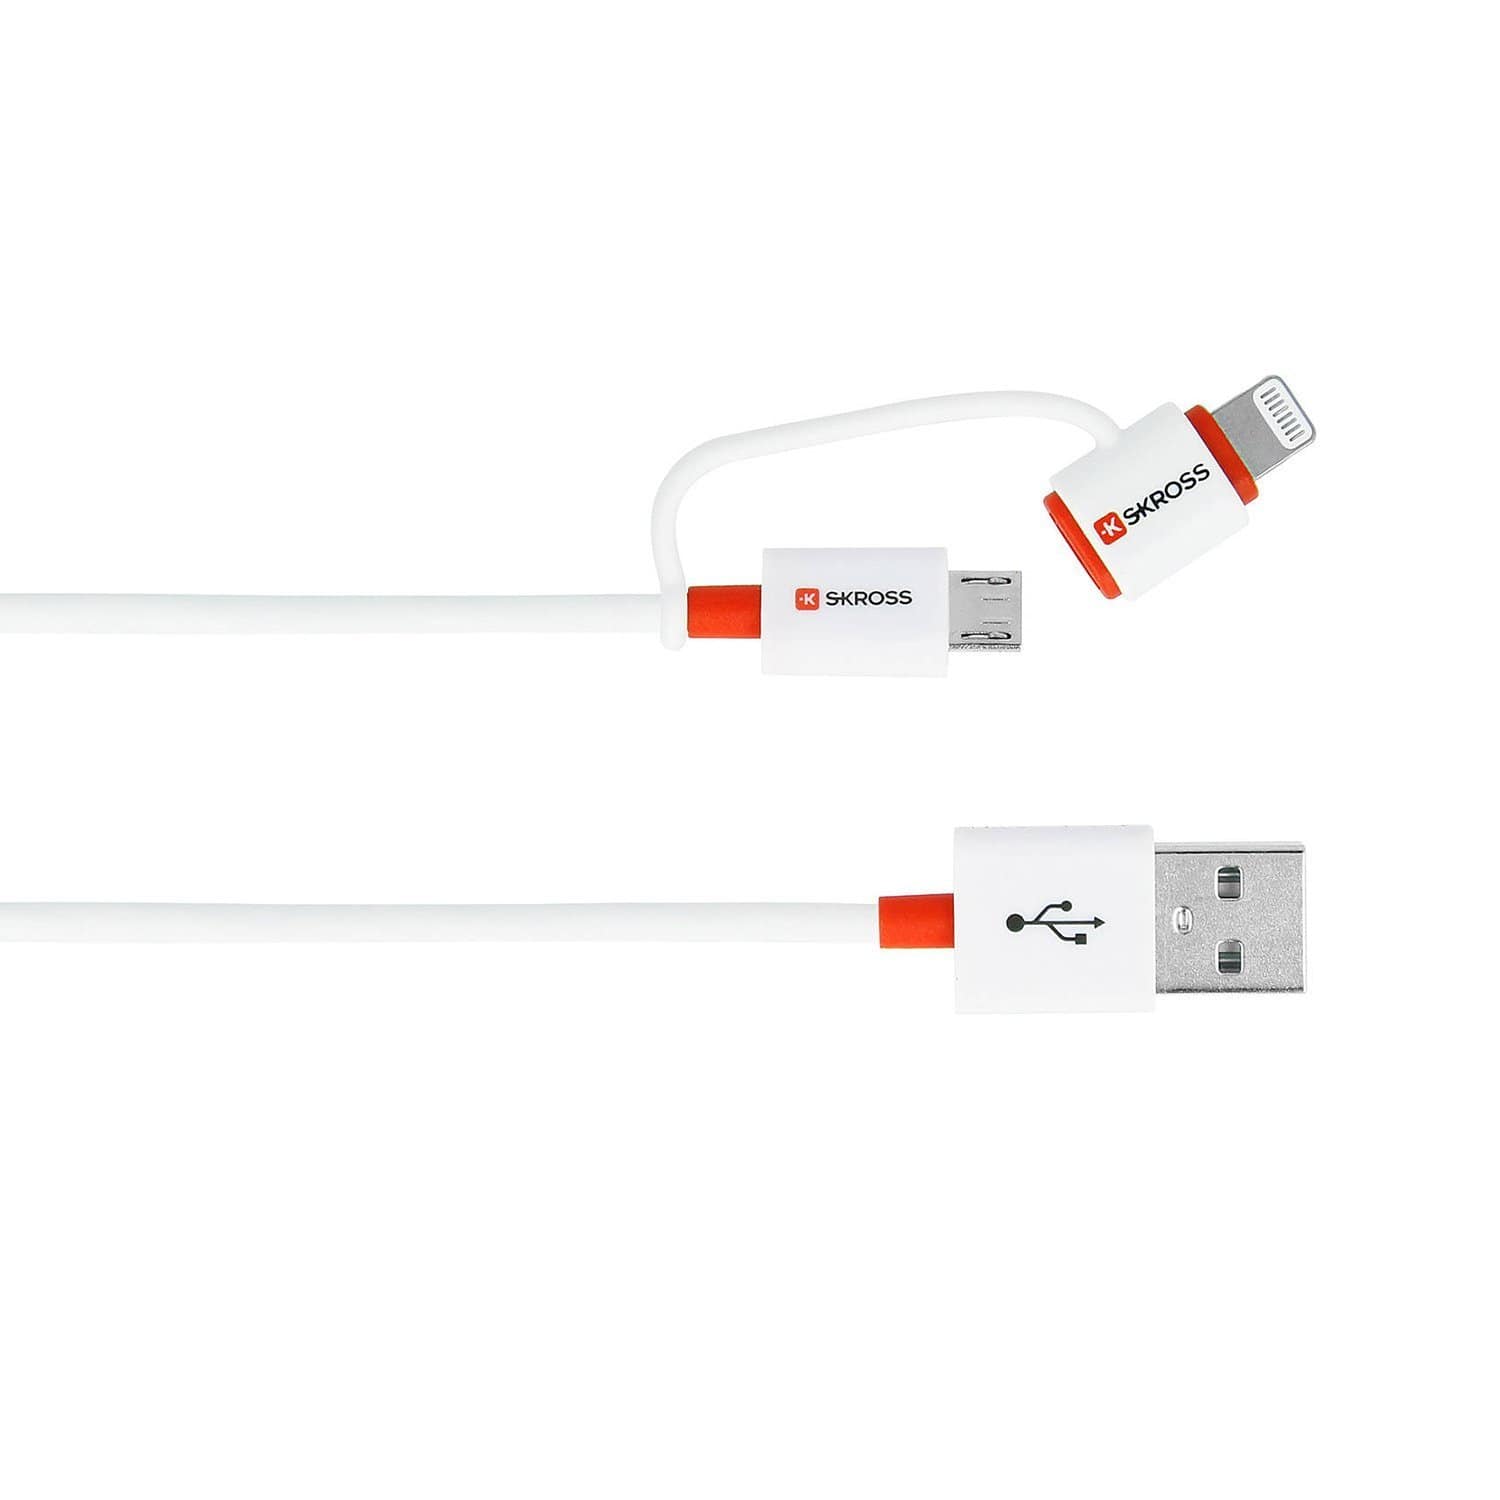 Skross أساسيات 2 في 1 تهمة N مزامنة مايكرو USB مع موصل البرق - أبيض - 2700200E - Jashanmal الرئيسية